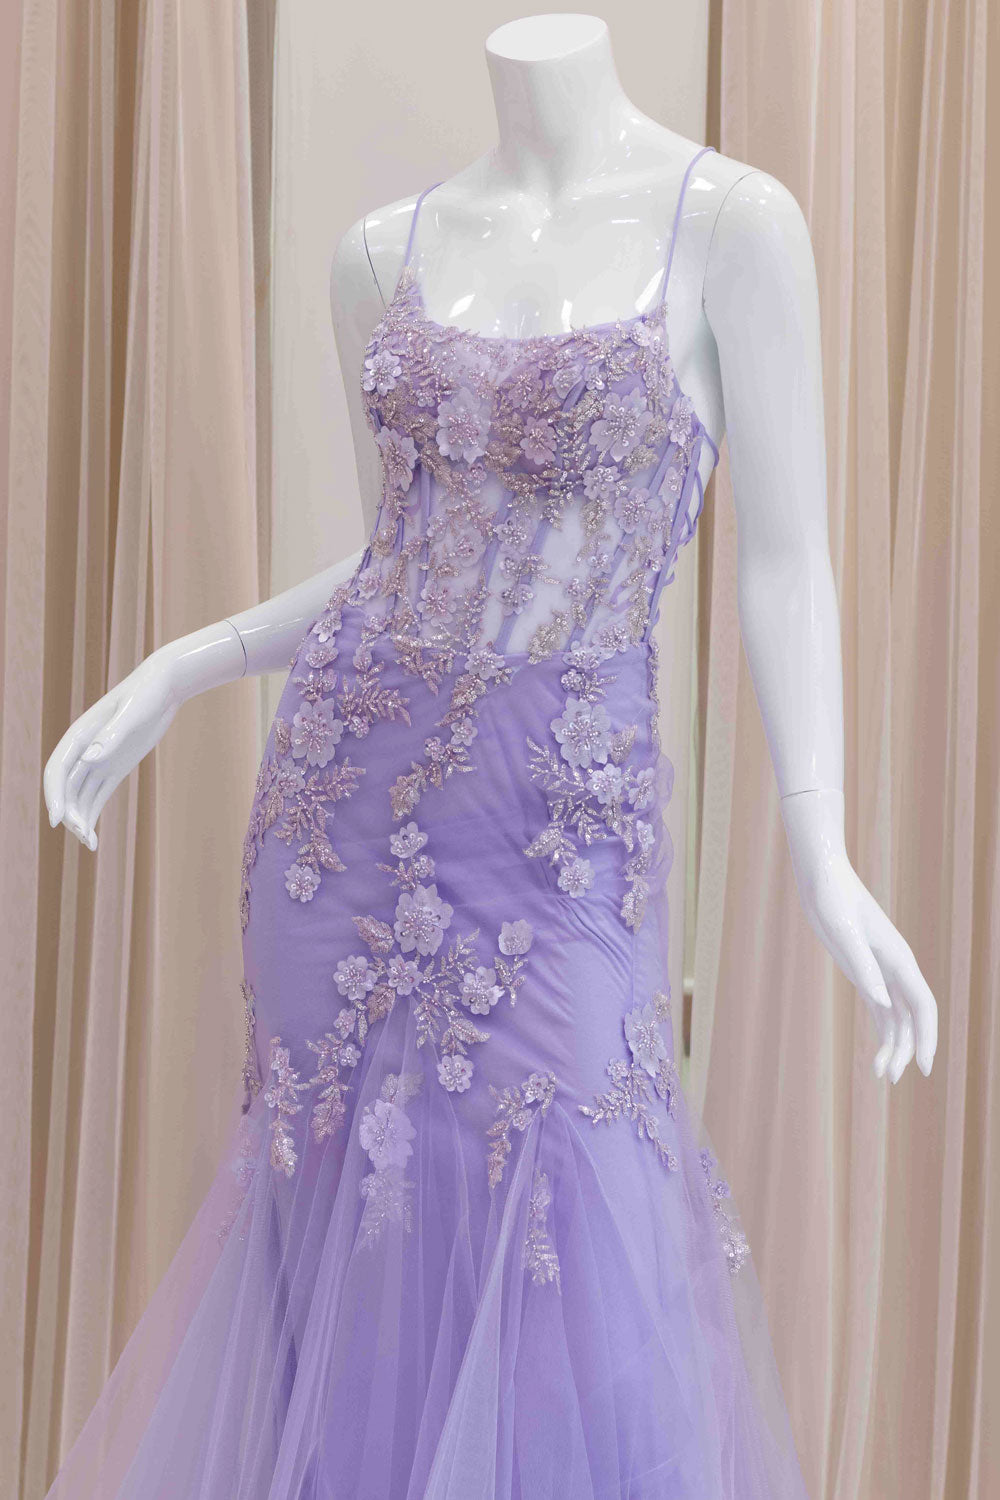 Lavender Mermaid Dress for Prom